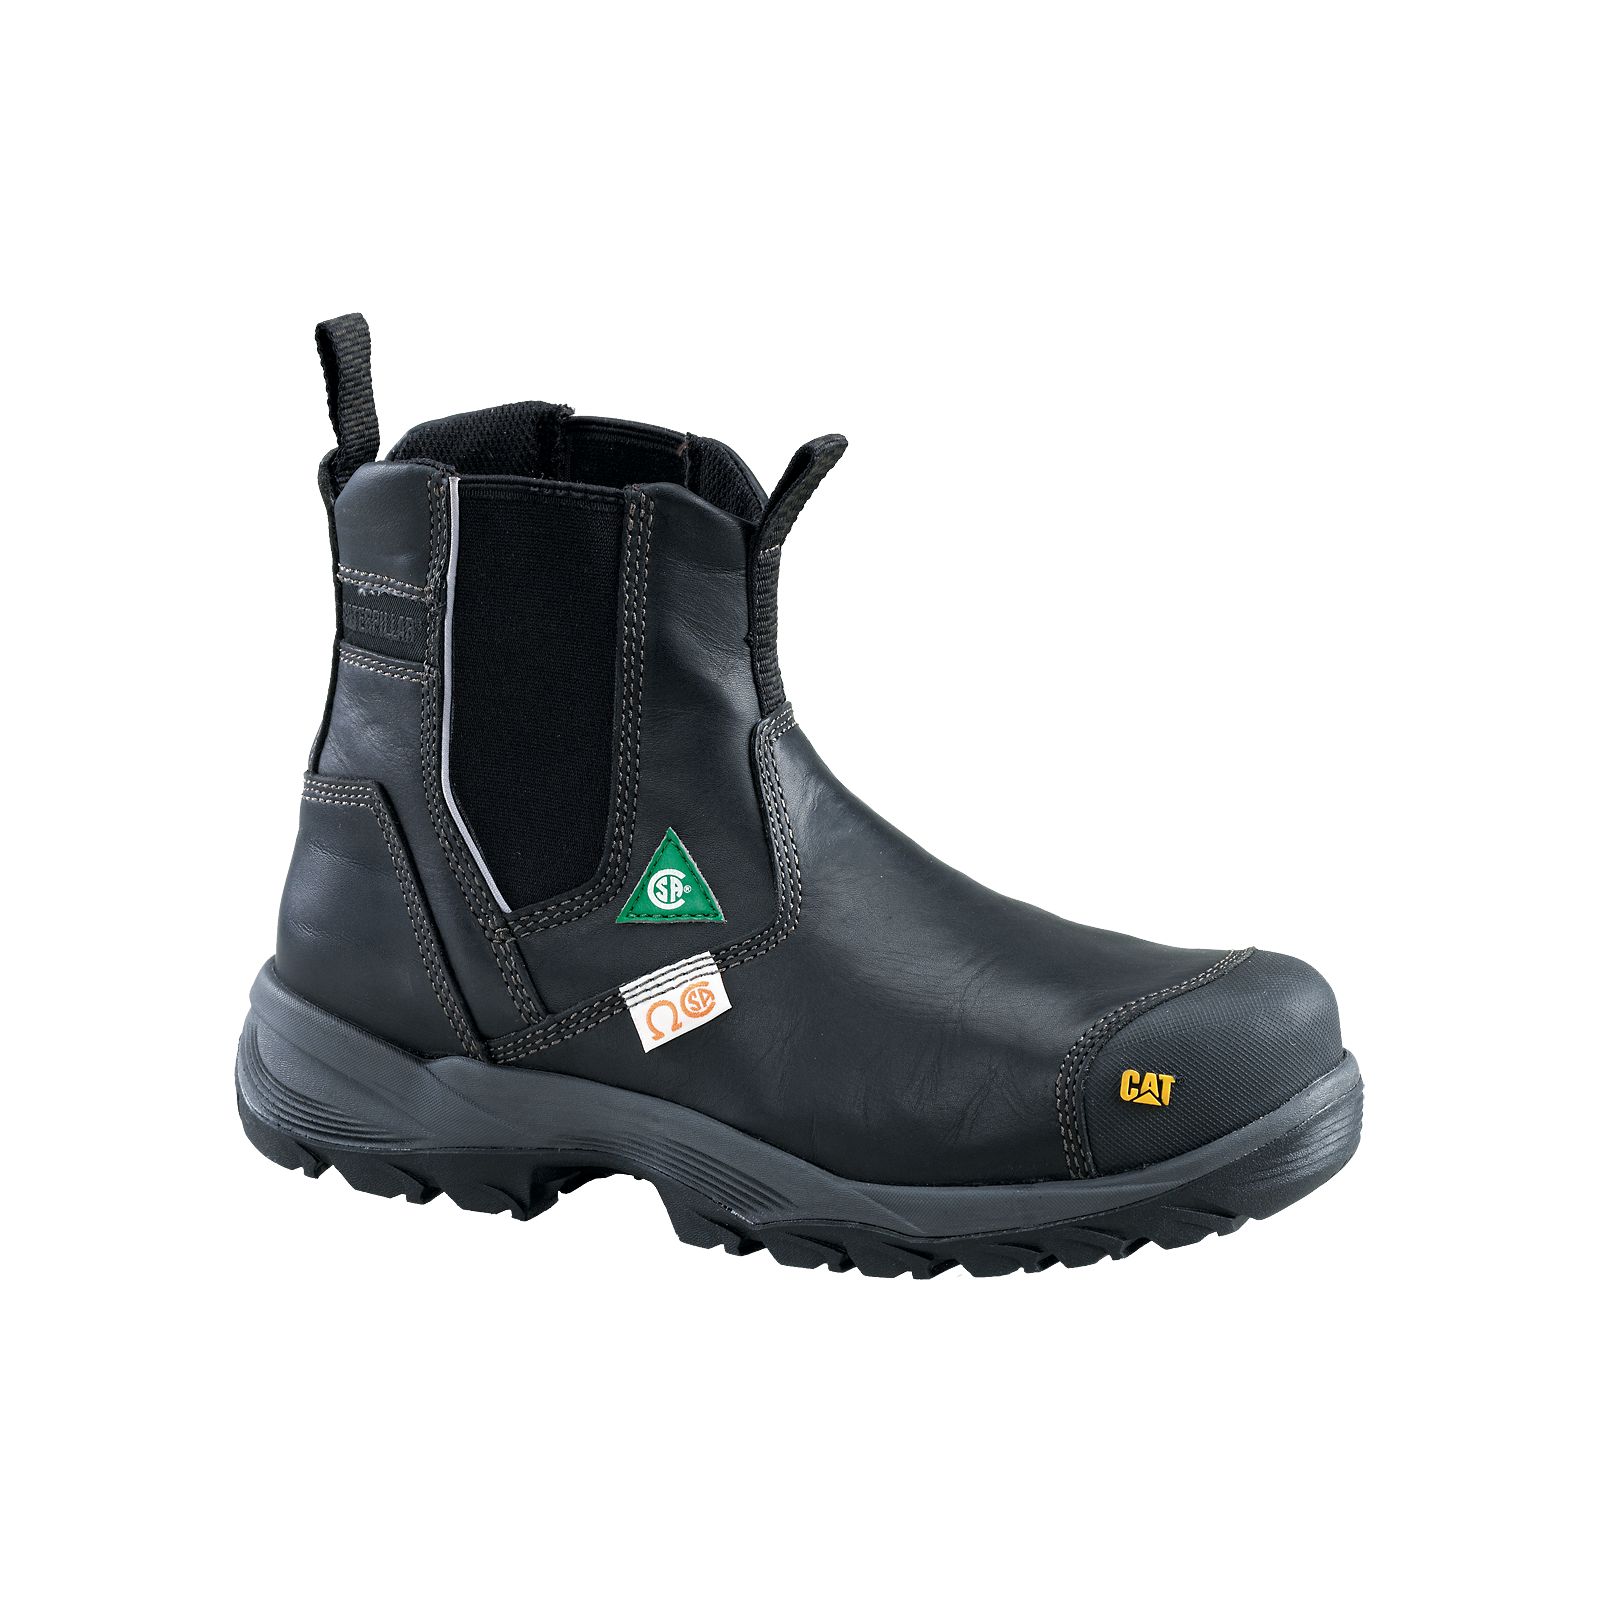 Caterpillar Work Boots UAE - Caterpillar Propane Csa Mens - Black OQYPJV643